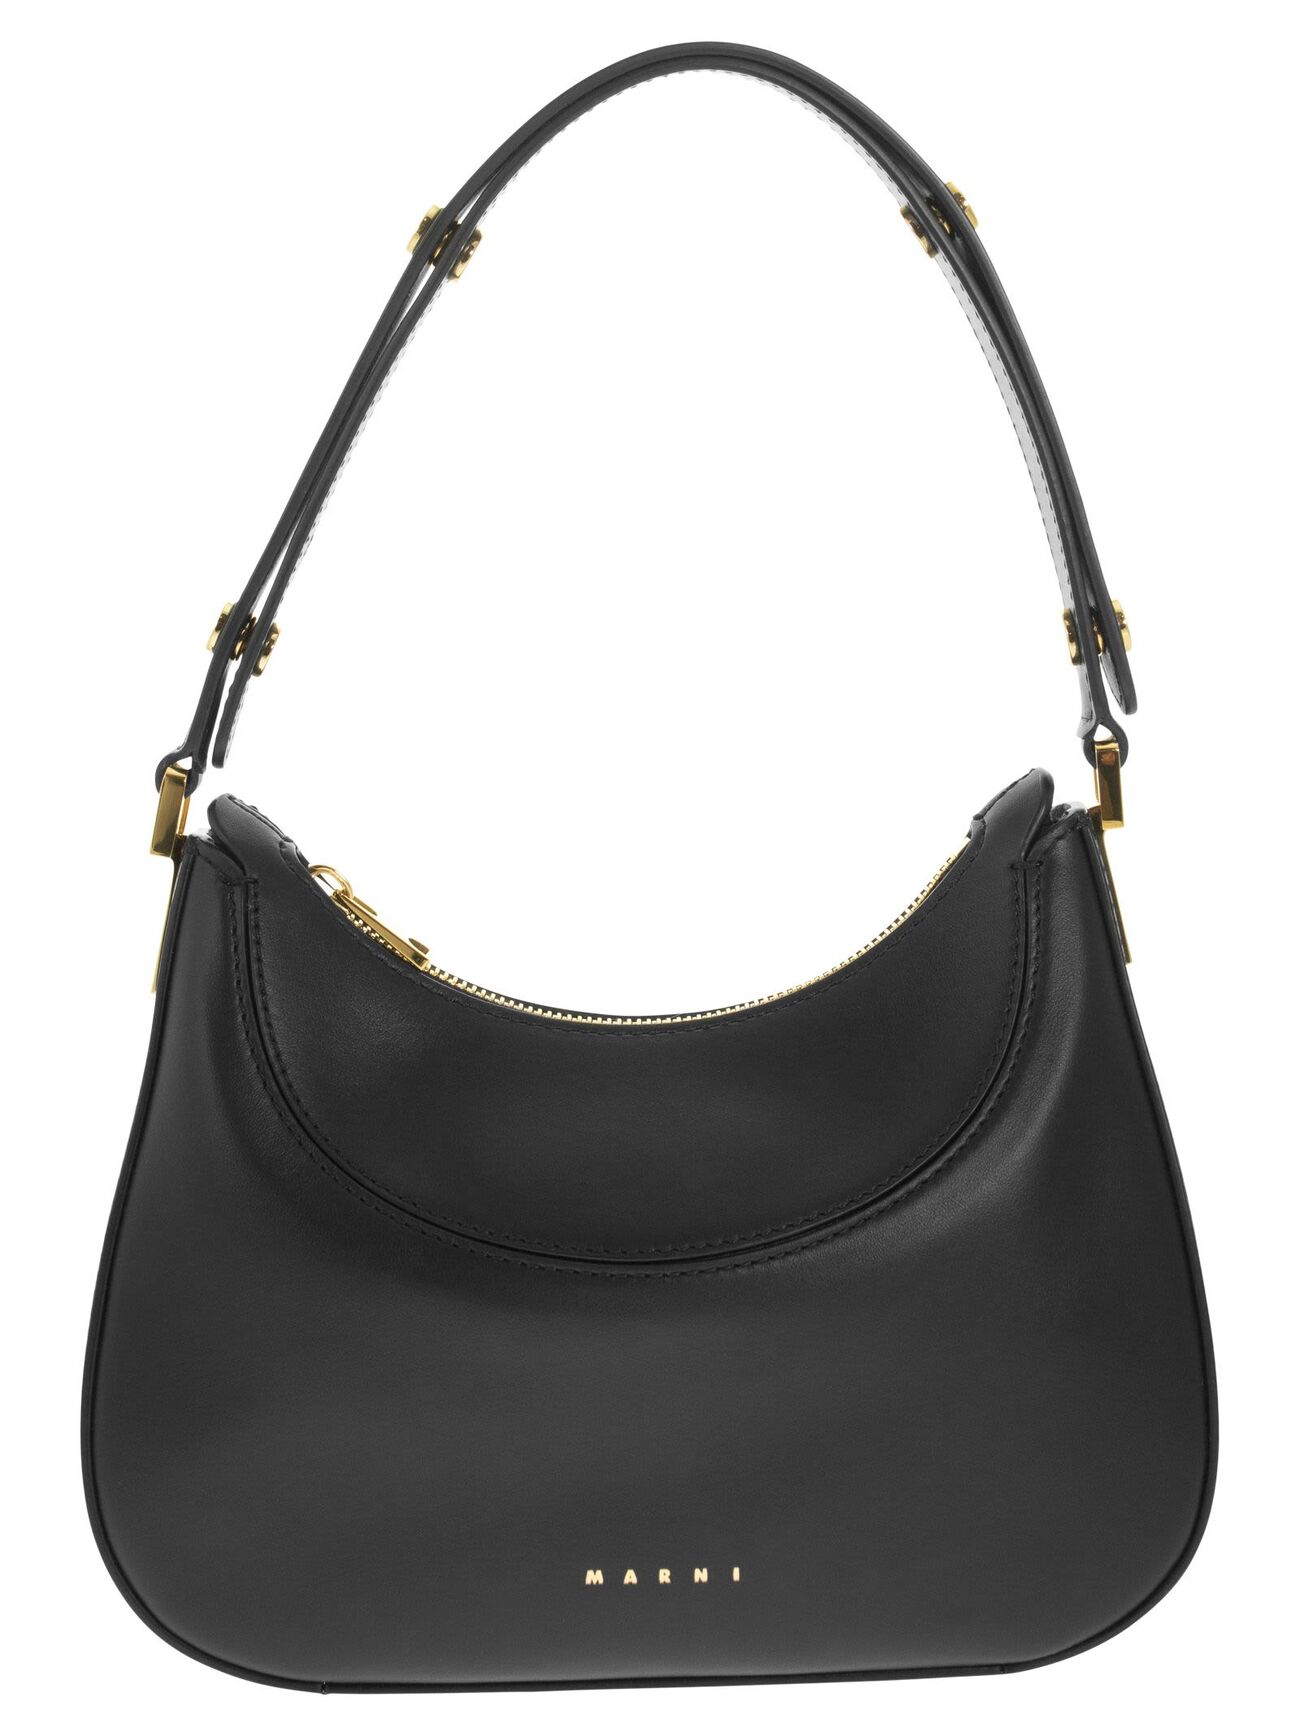 Marni Milano Bag - Small Leather Handbag in black